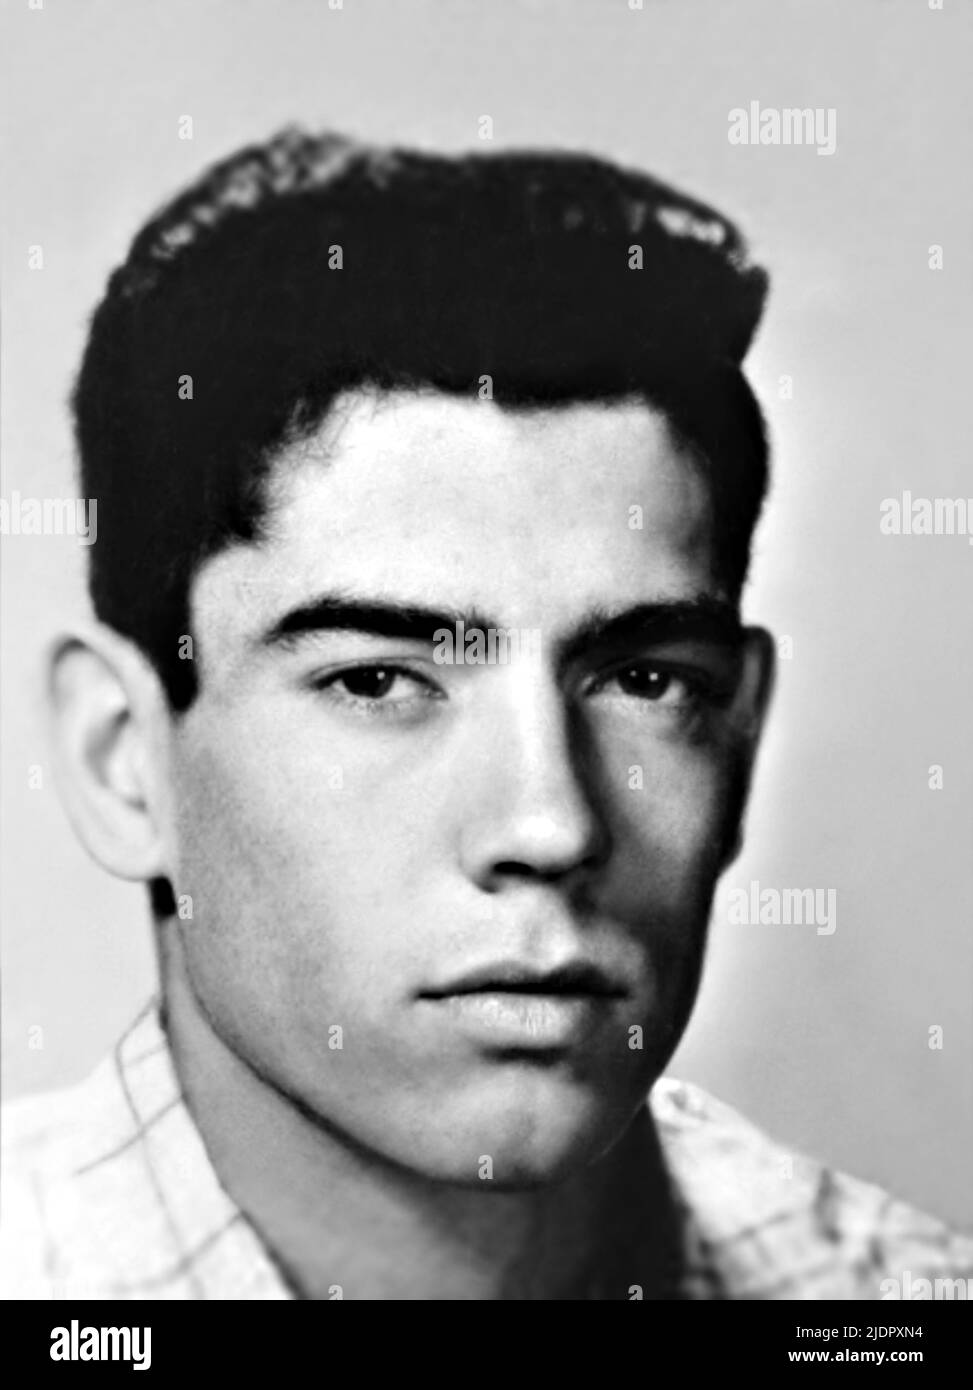 1948 ca , USA : The American television host, national evening news anchor and journalist DAN RATHER ( born 31 october 1931 ), when was young aged 17 , photo from HIGH SCHOOL YEARBOOK . Unknown photographer. - HISTORY - FOTO STORICHE - personalità da giovane giovani - personality personalities when was young - PORTRAIT - RITRATTO - conduttore televisivo - ABC - NBC - presentatore - TV - TELEVISIONE - ANCHOR MAN - MEZZOBUSTO - TELEGIORNALE - TG --- ARCHIVIO GBB Stock Photo